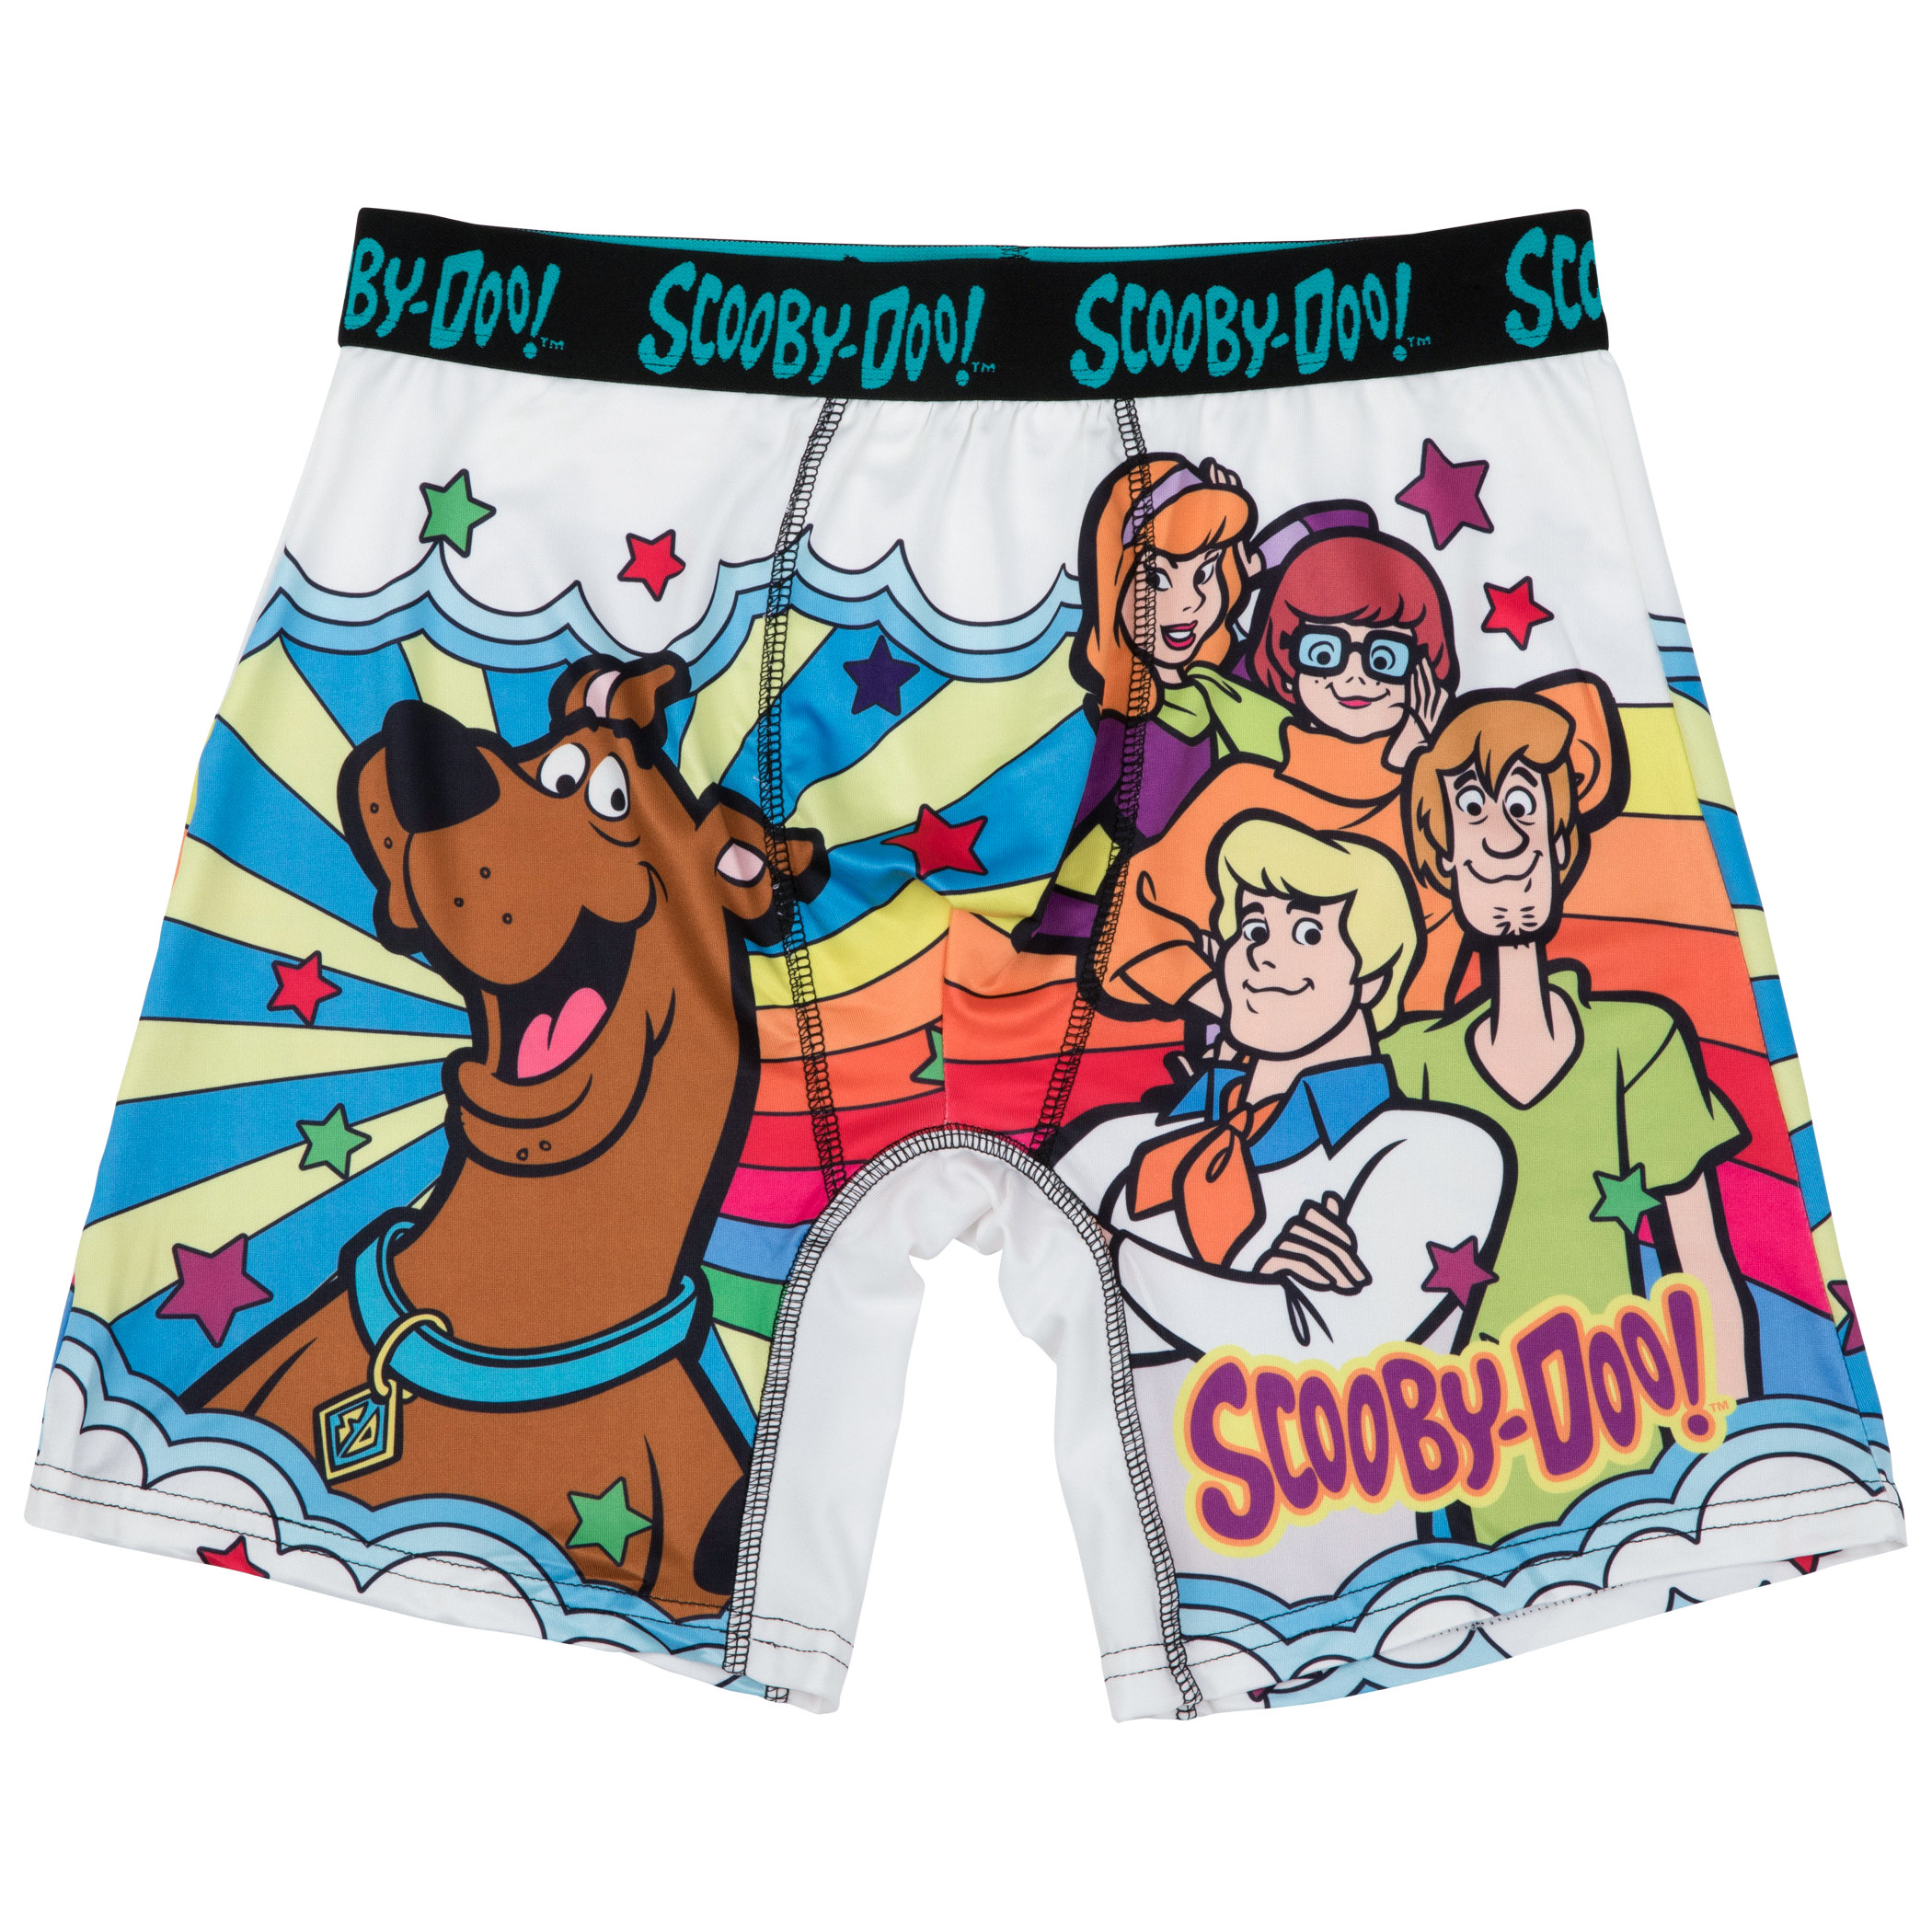 Scooby-Doo Psychedelic Rainbow Boxer Briefs